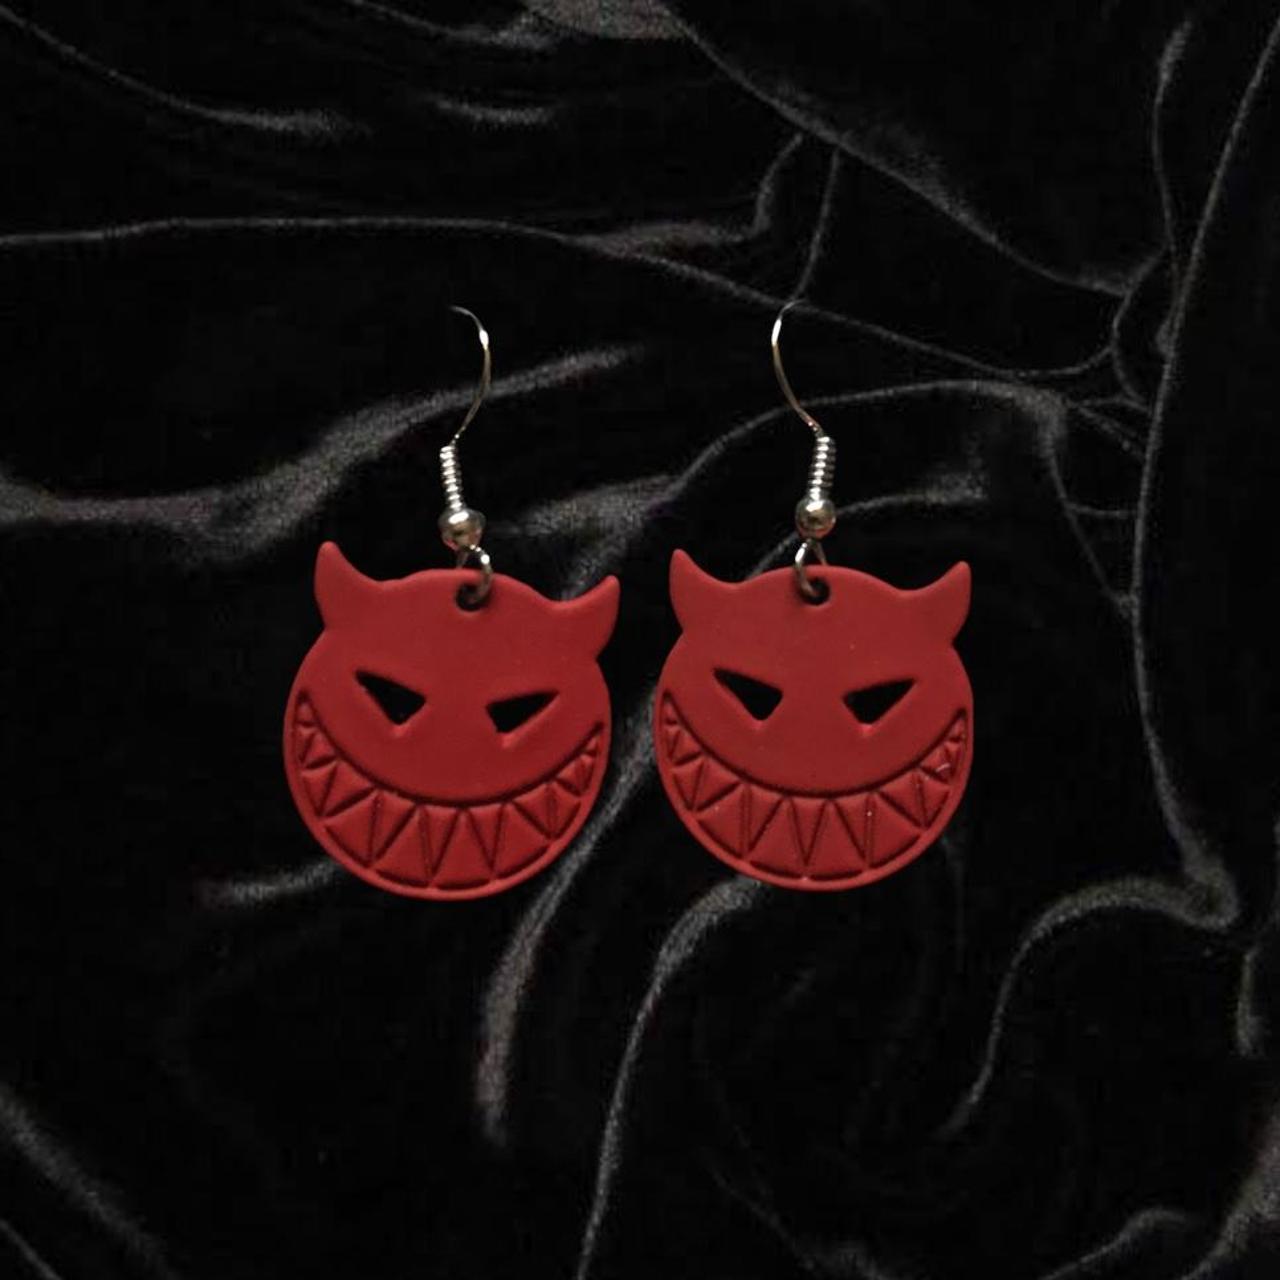 Product Image 1 - NEW. 
Devil Earrings. 
I ship